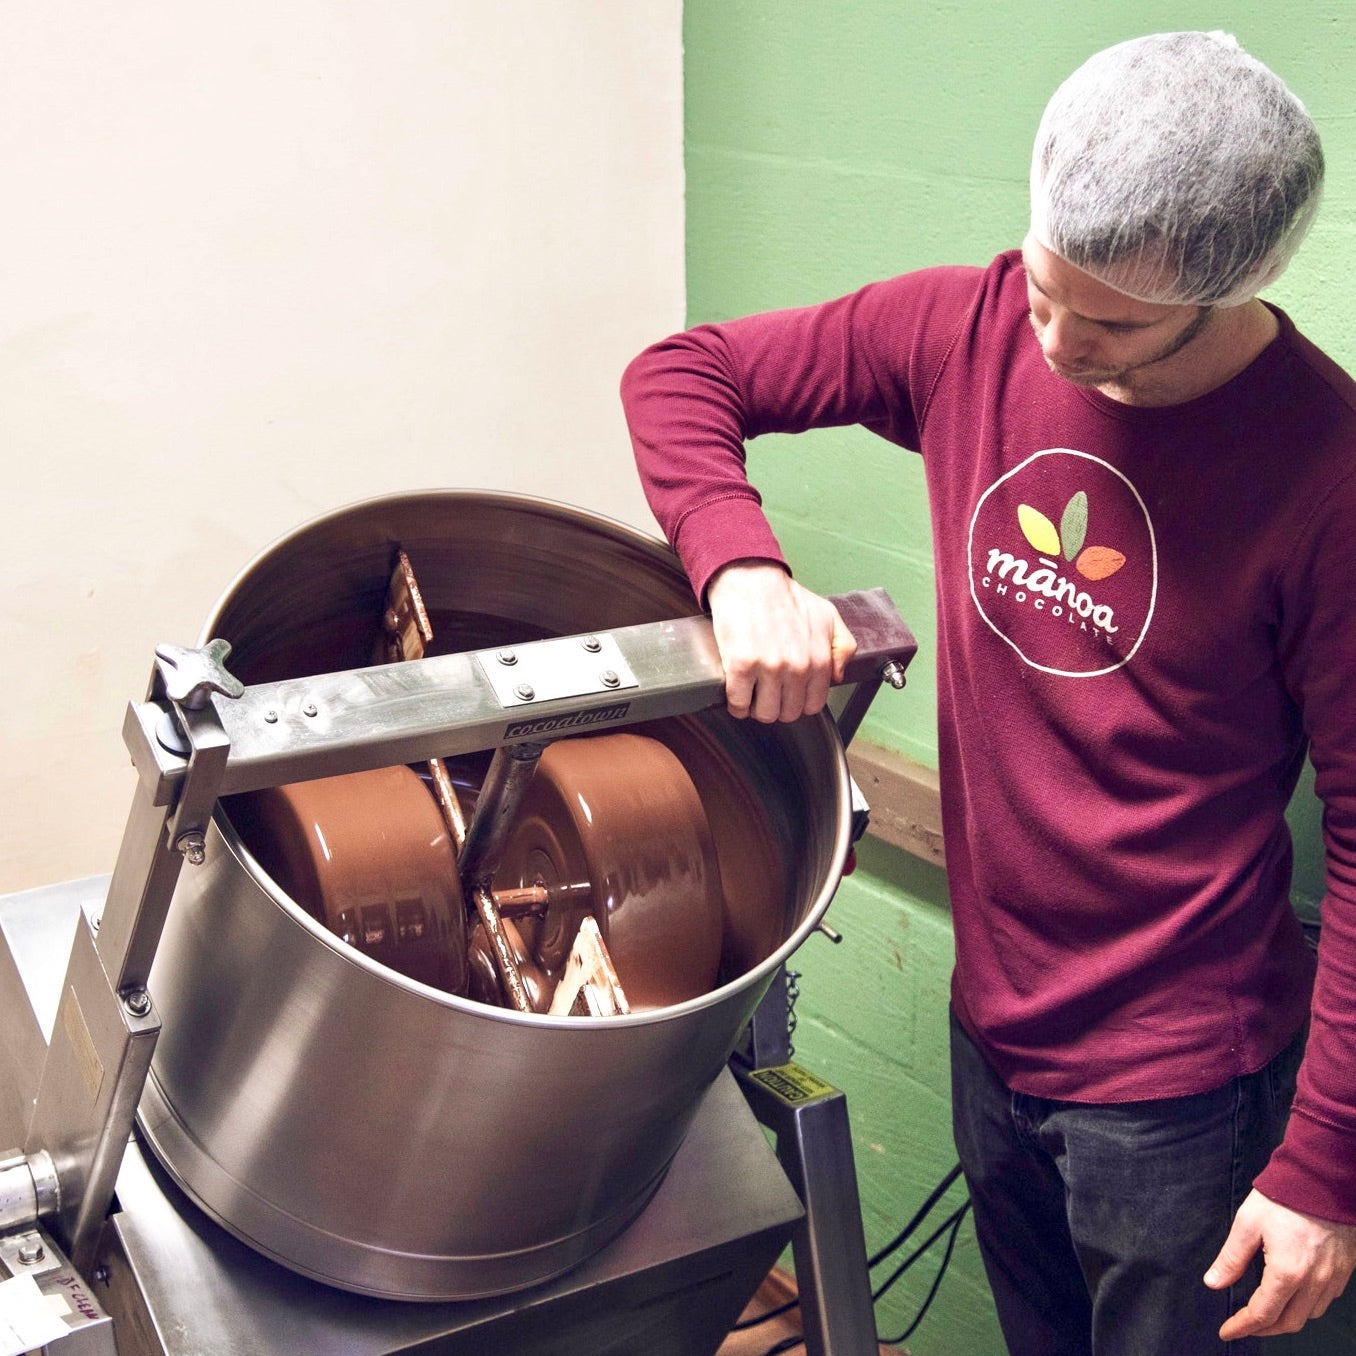 Man operating industrial chocolate-making equipment